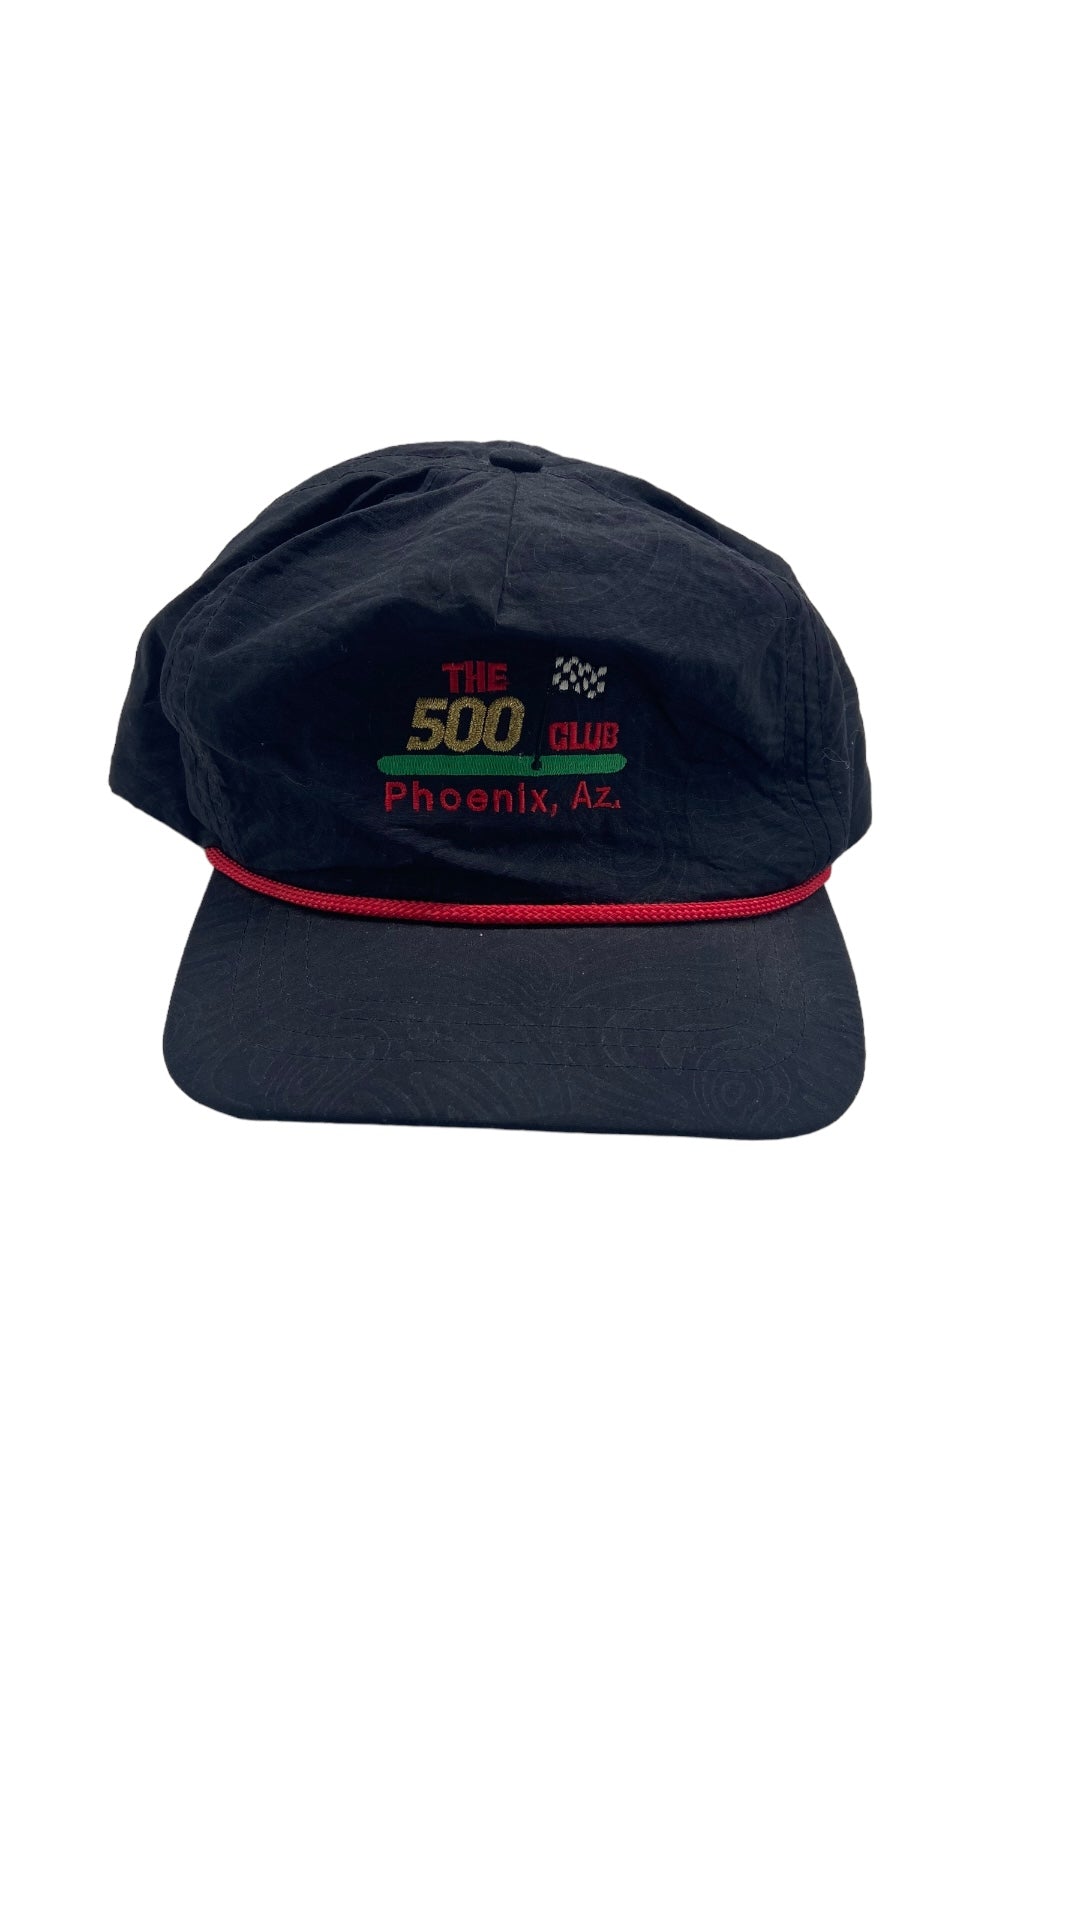 VTG Duckster The 500 Club Phoenix Az Hat